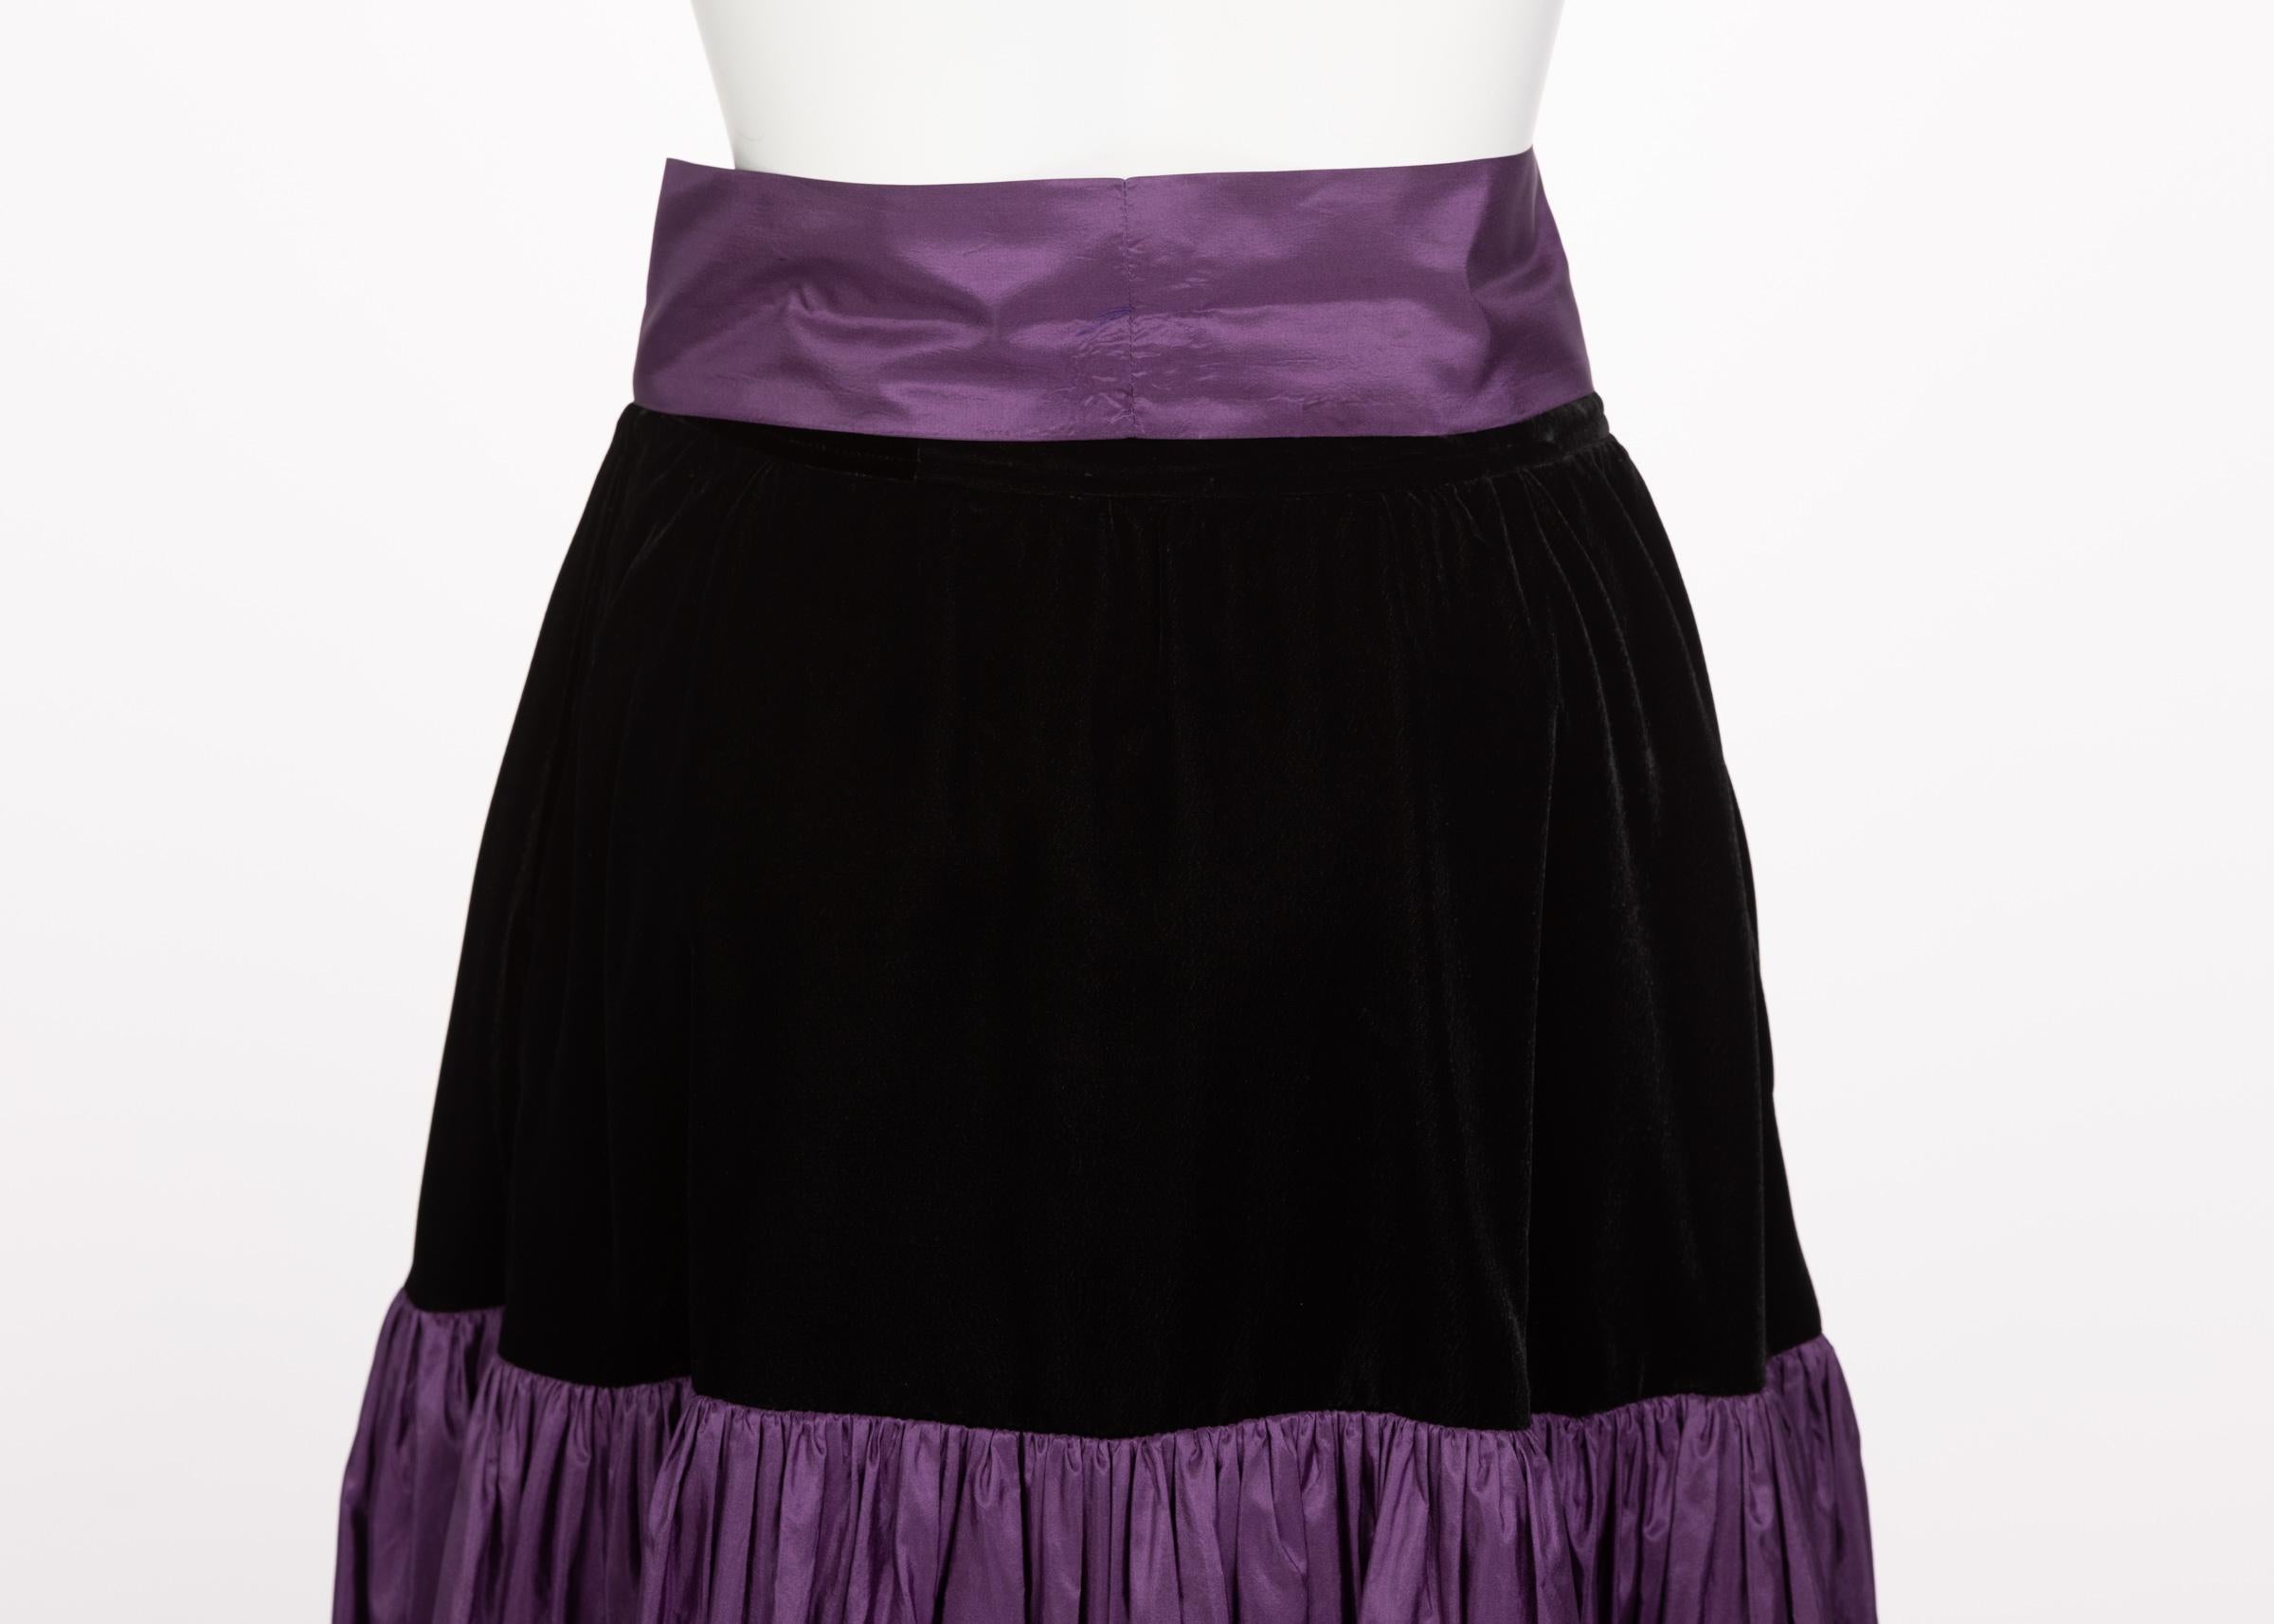 Yves Saint Laurent Skirt Russian Collection Purple Skirt YSL, 1970s 2